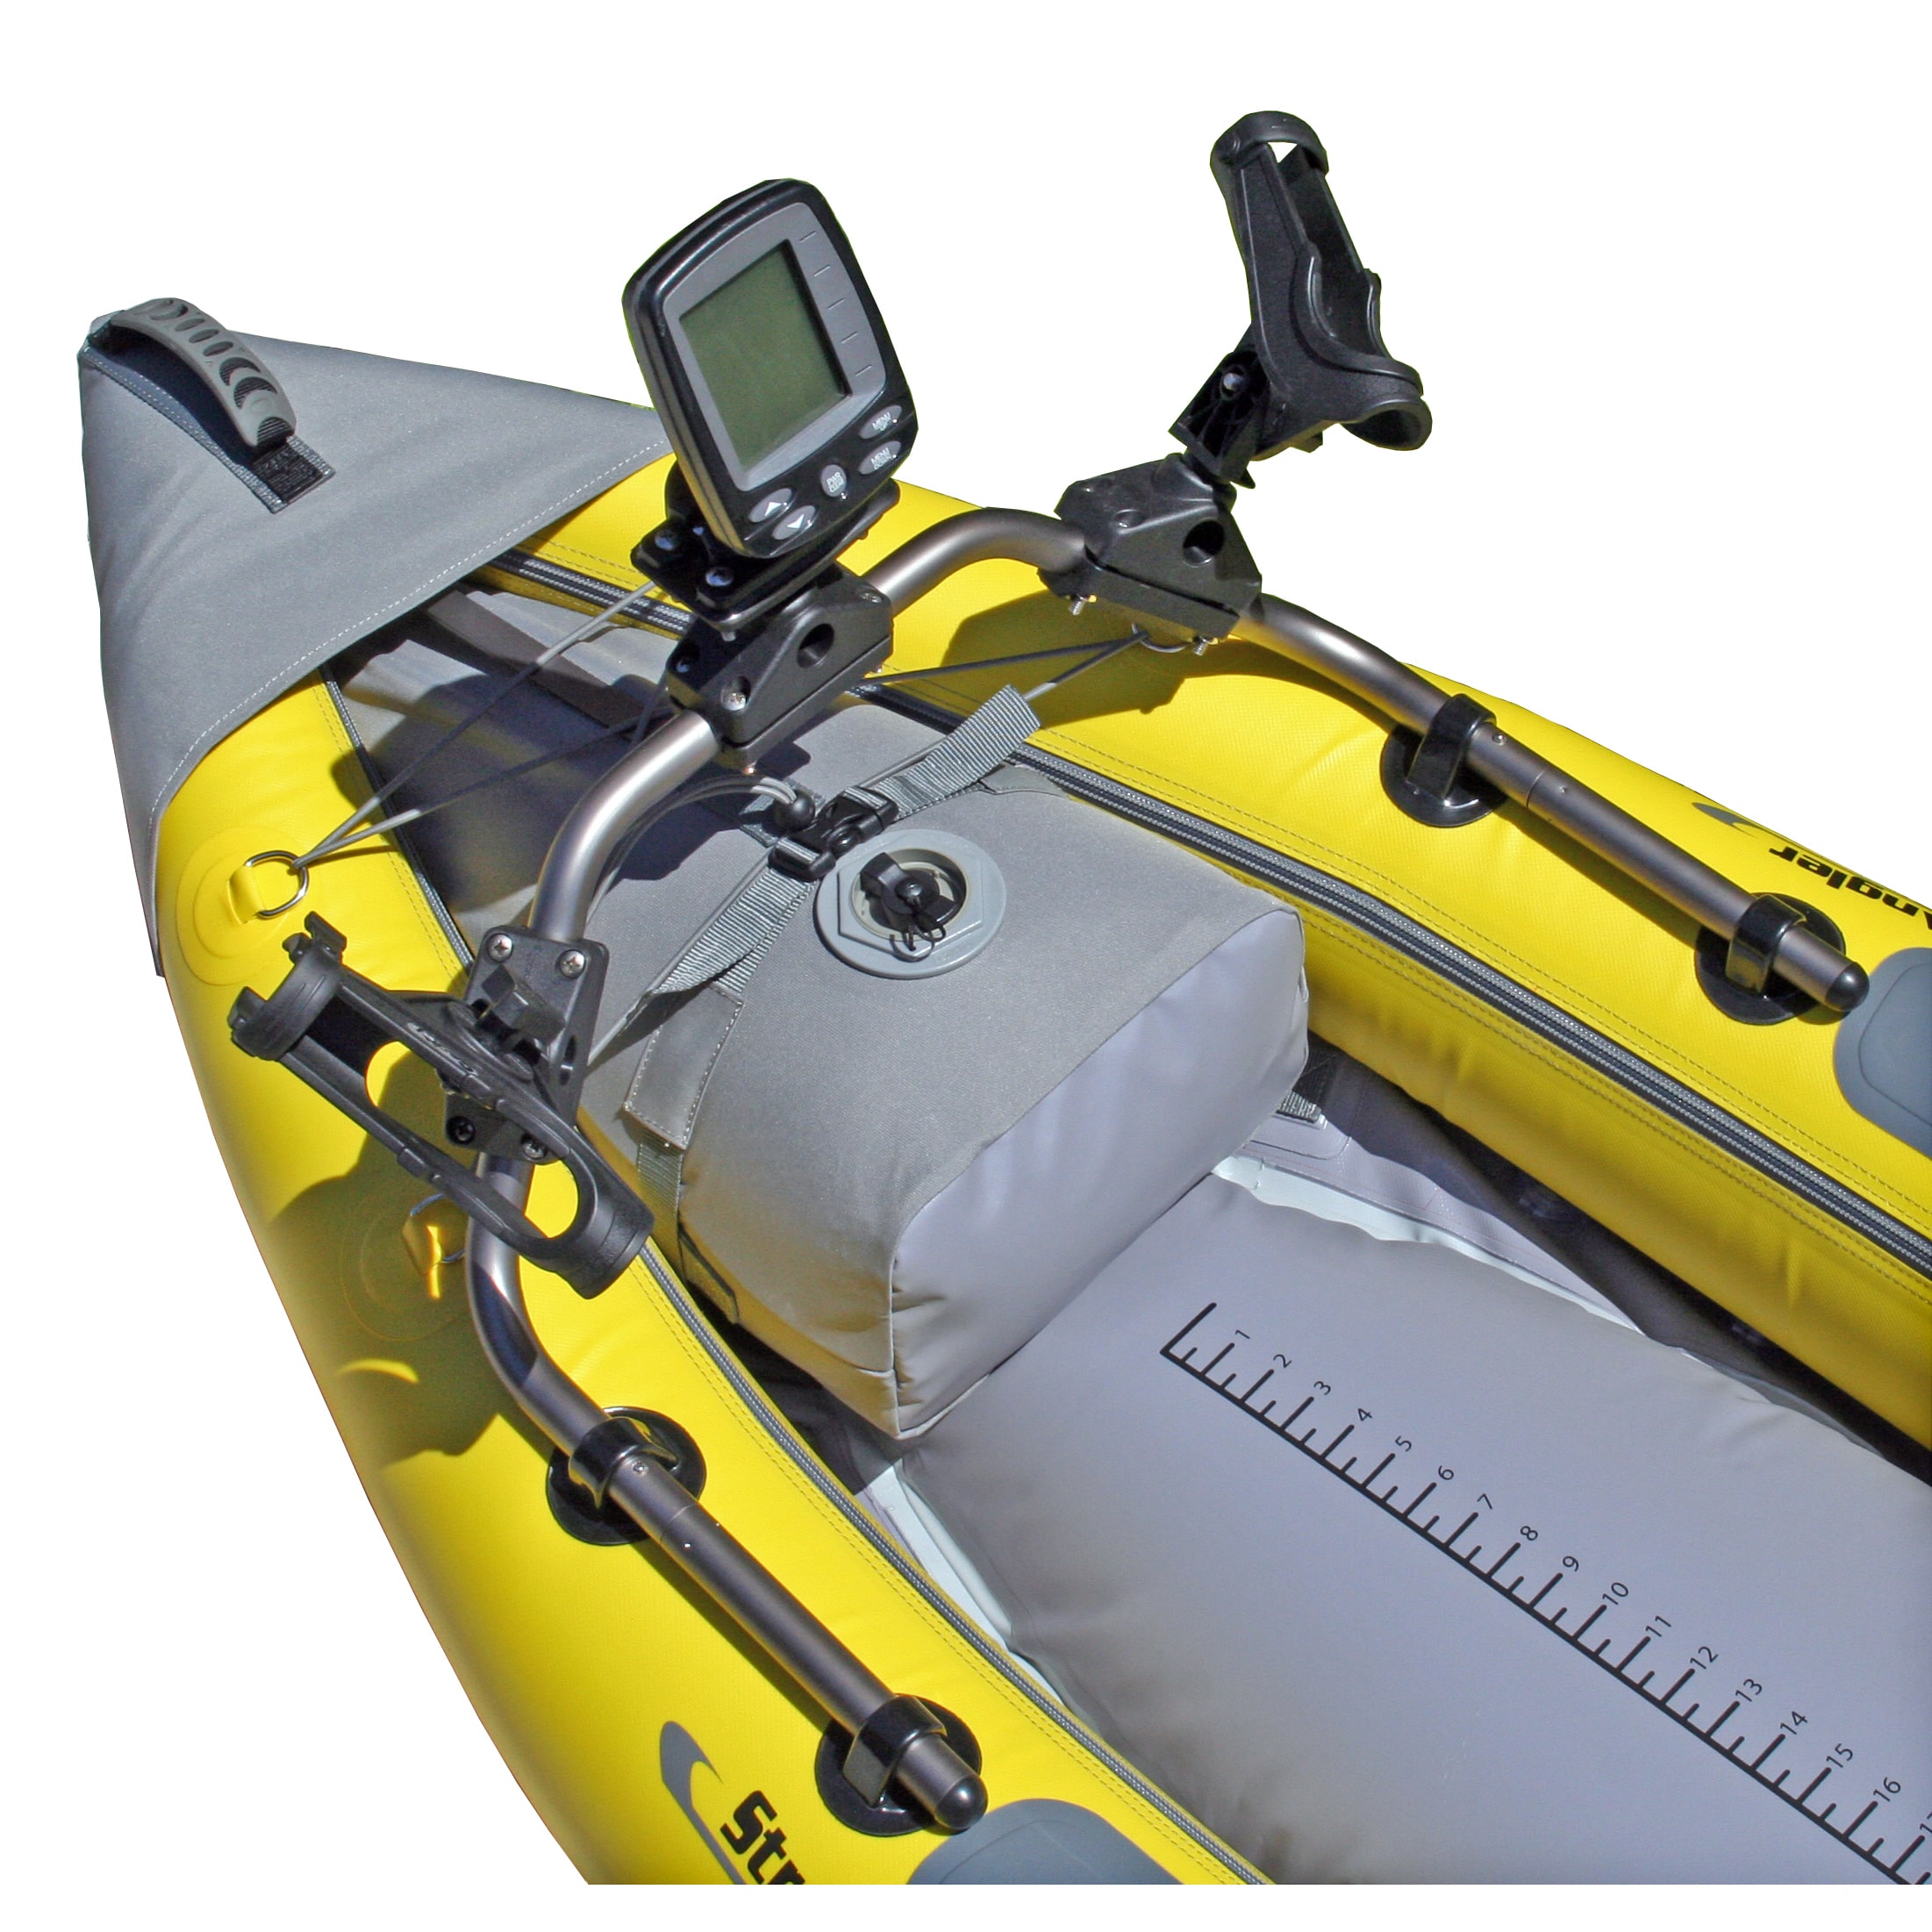 Advanced Elements StraitEdge Angler Inflatable Sit on Top Kayak - image 4 of 4